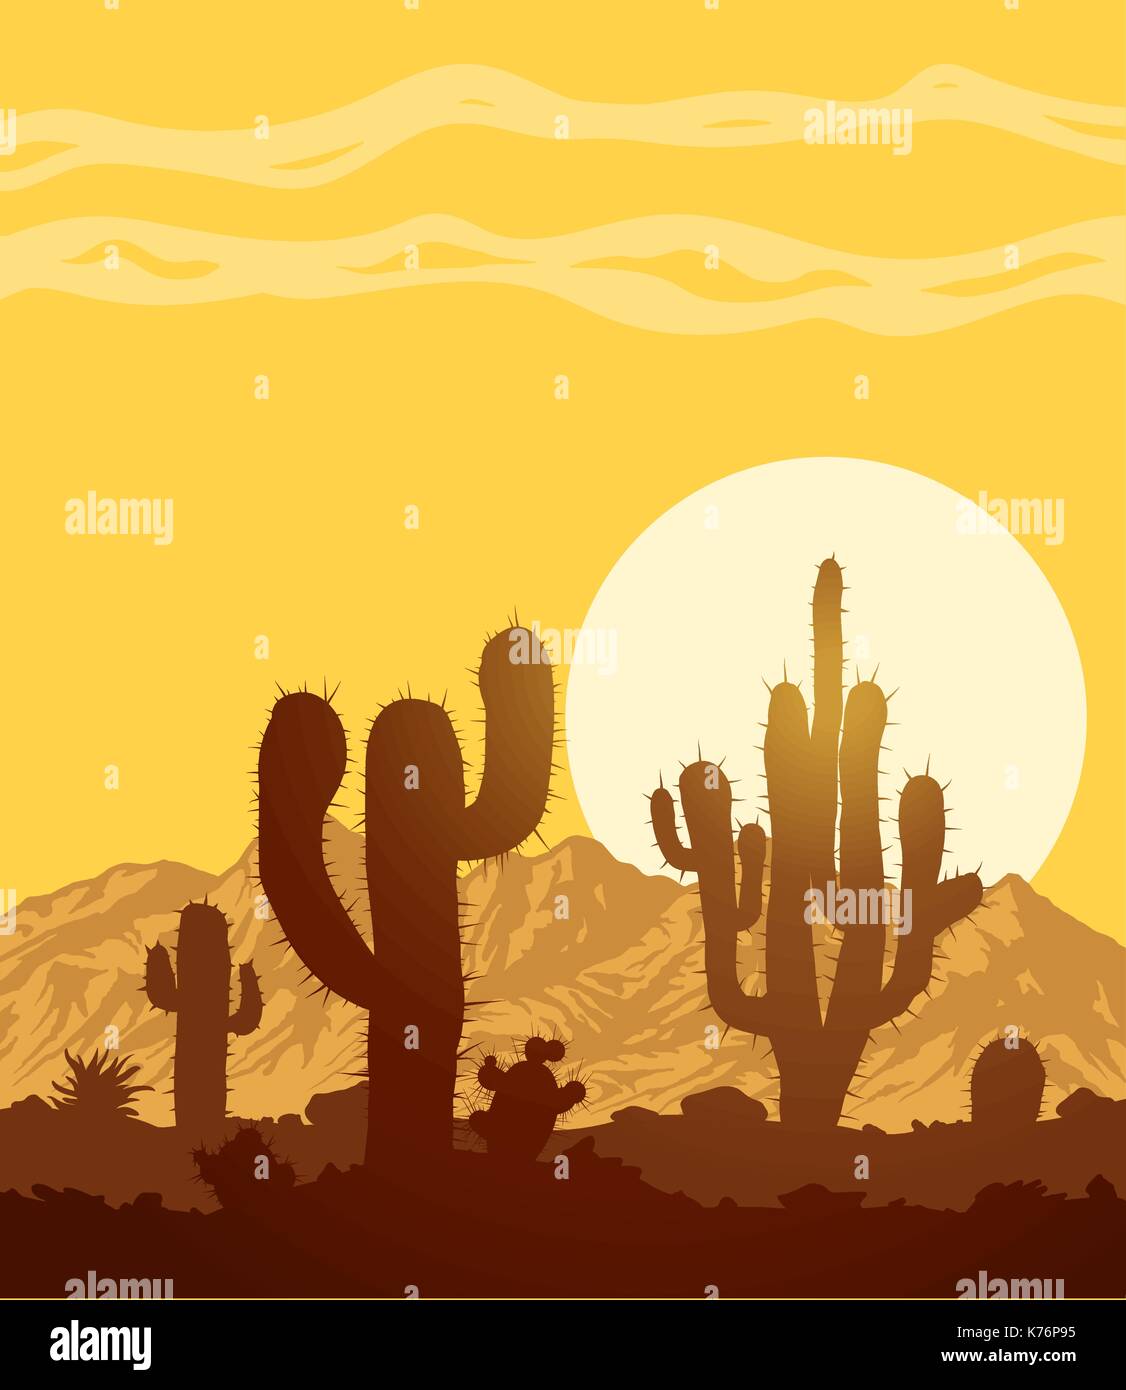 Sonnenuntergang in Stein Wüste mit Kakteen Stock Vektor